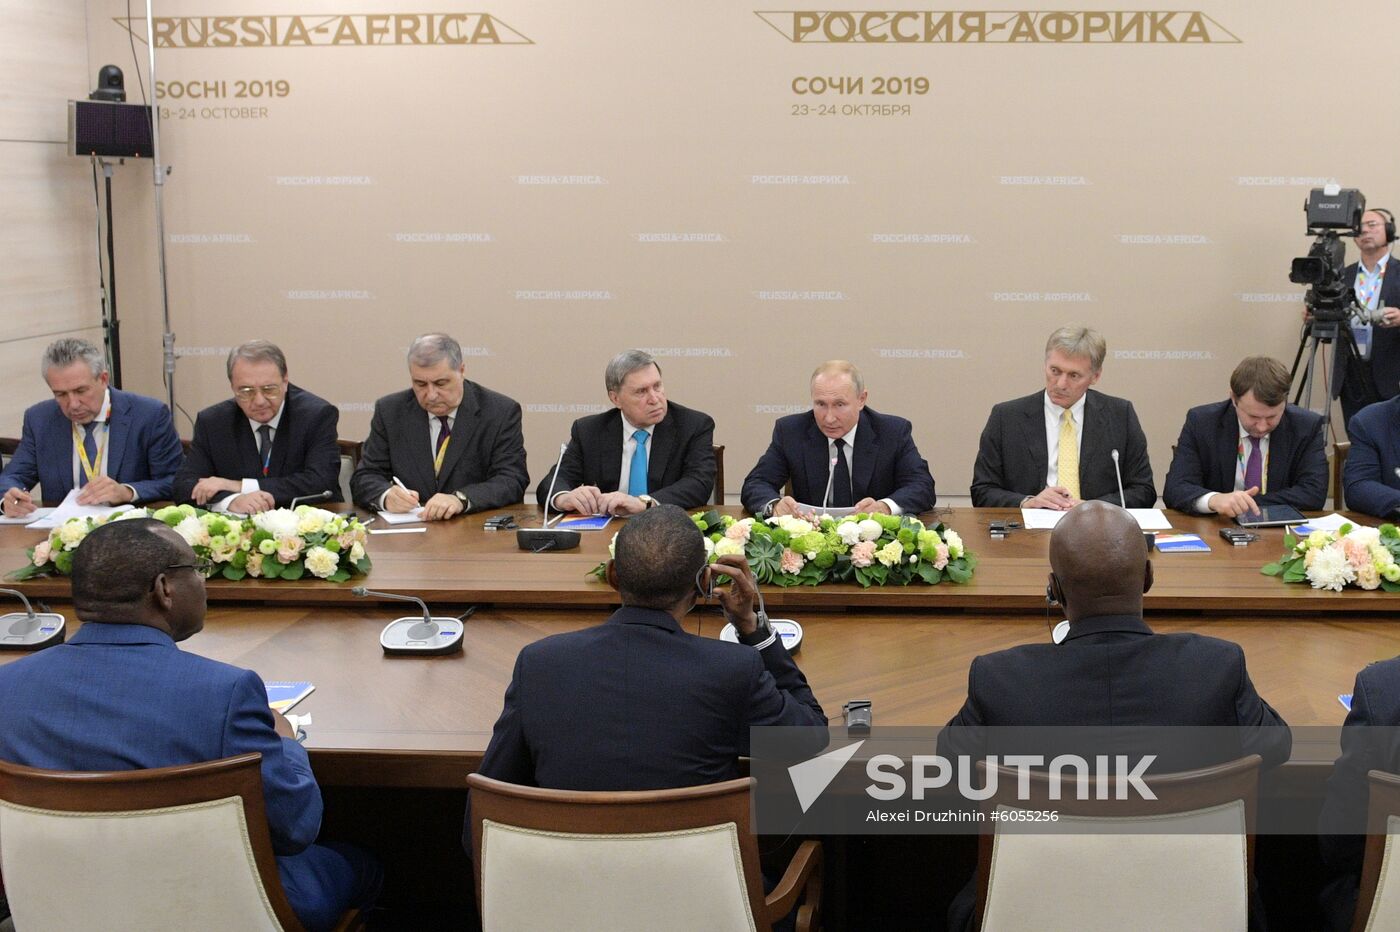 Russia Putin African Leaders